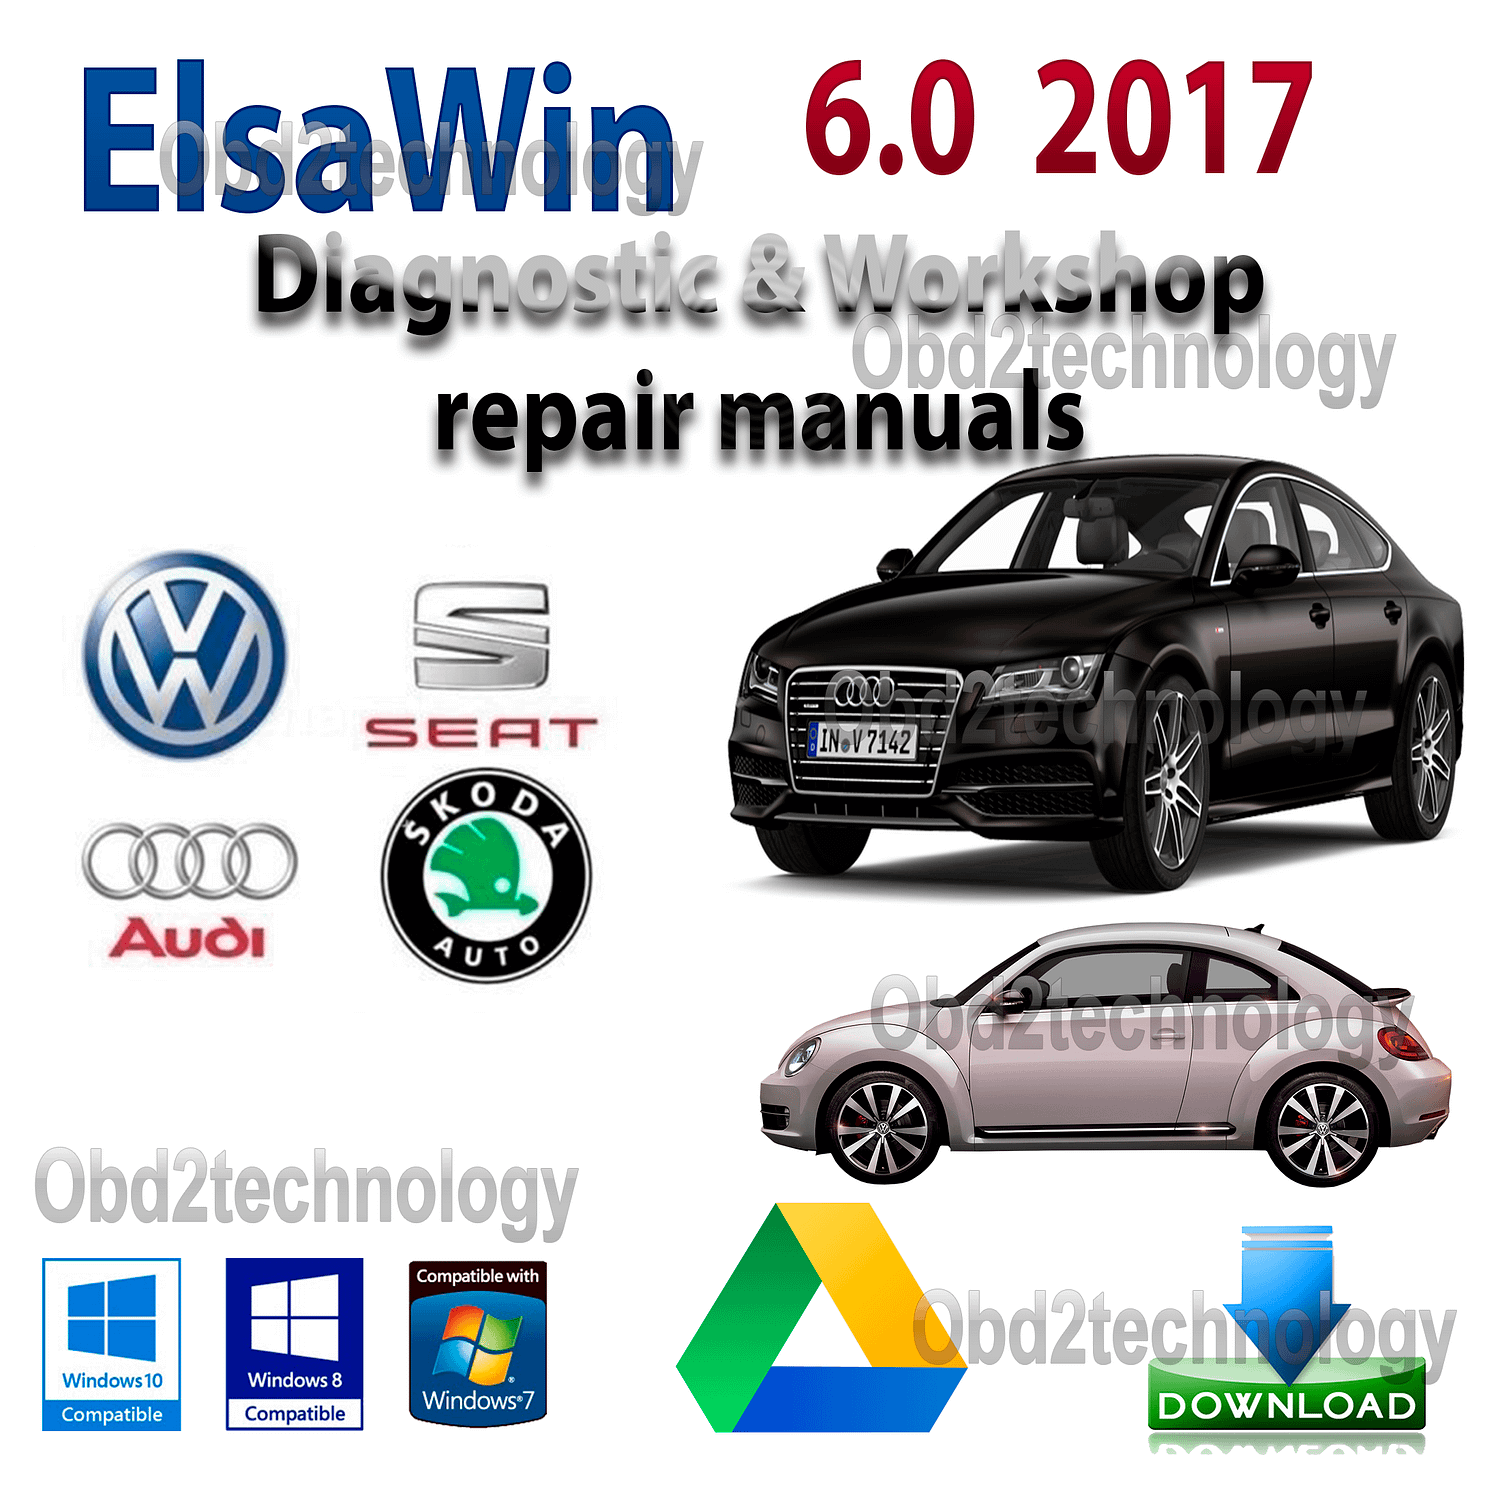 elsawin 6.0 volkswagen audi seat skoda diagnose und reparatur software 2017 instant download